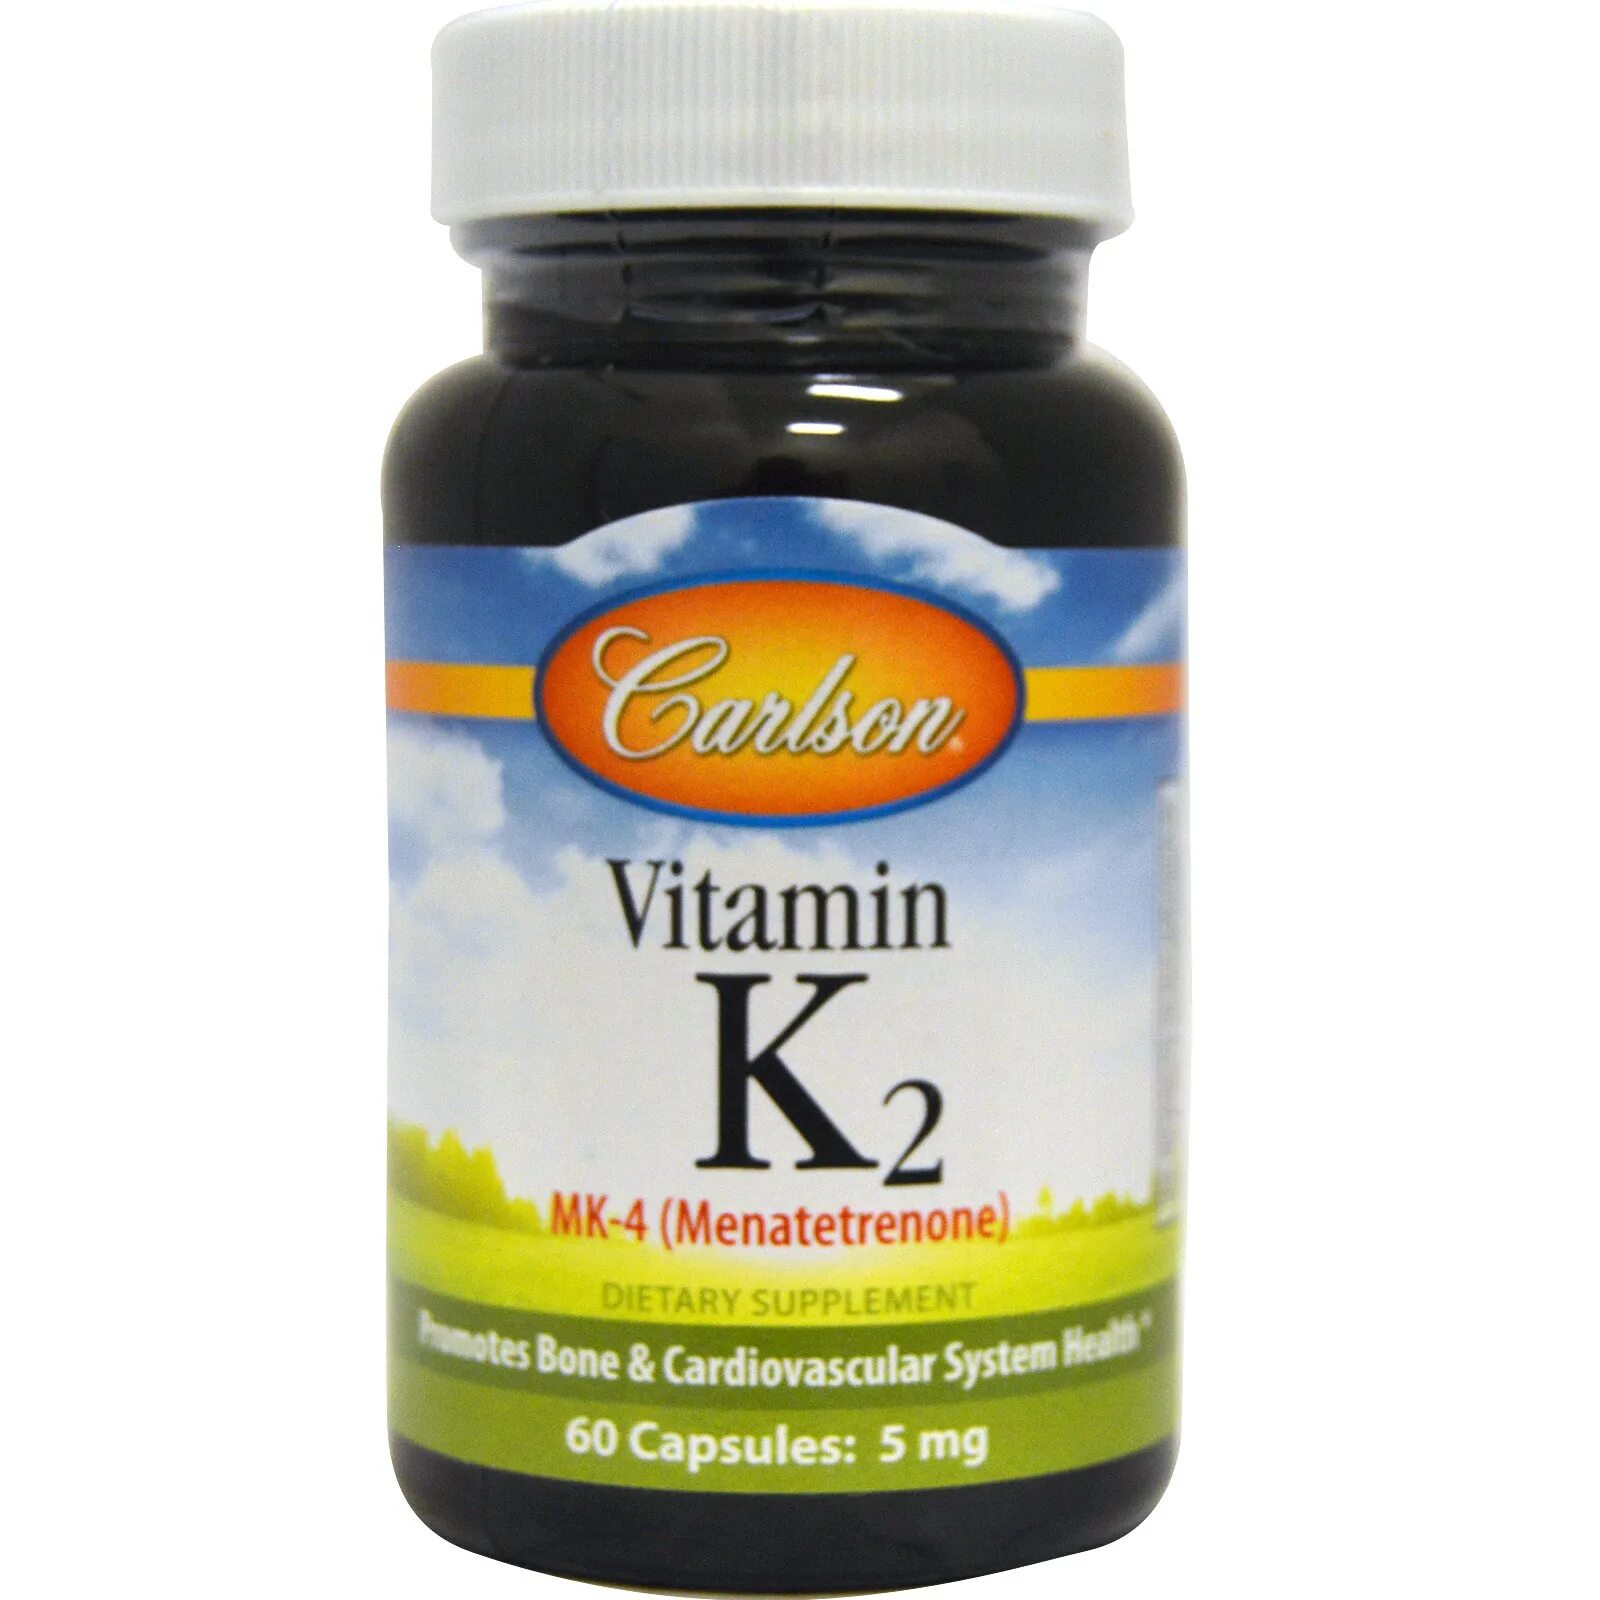 Витамин к2 капсулы 350мг. Витамин к2 (Vitamin к2), 450 мг, 60 капсул. Carlson витамин д3 k2. Super Nutrition Vitamin d3 + k2, 60 капсул.